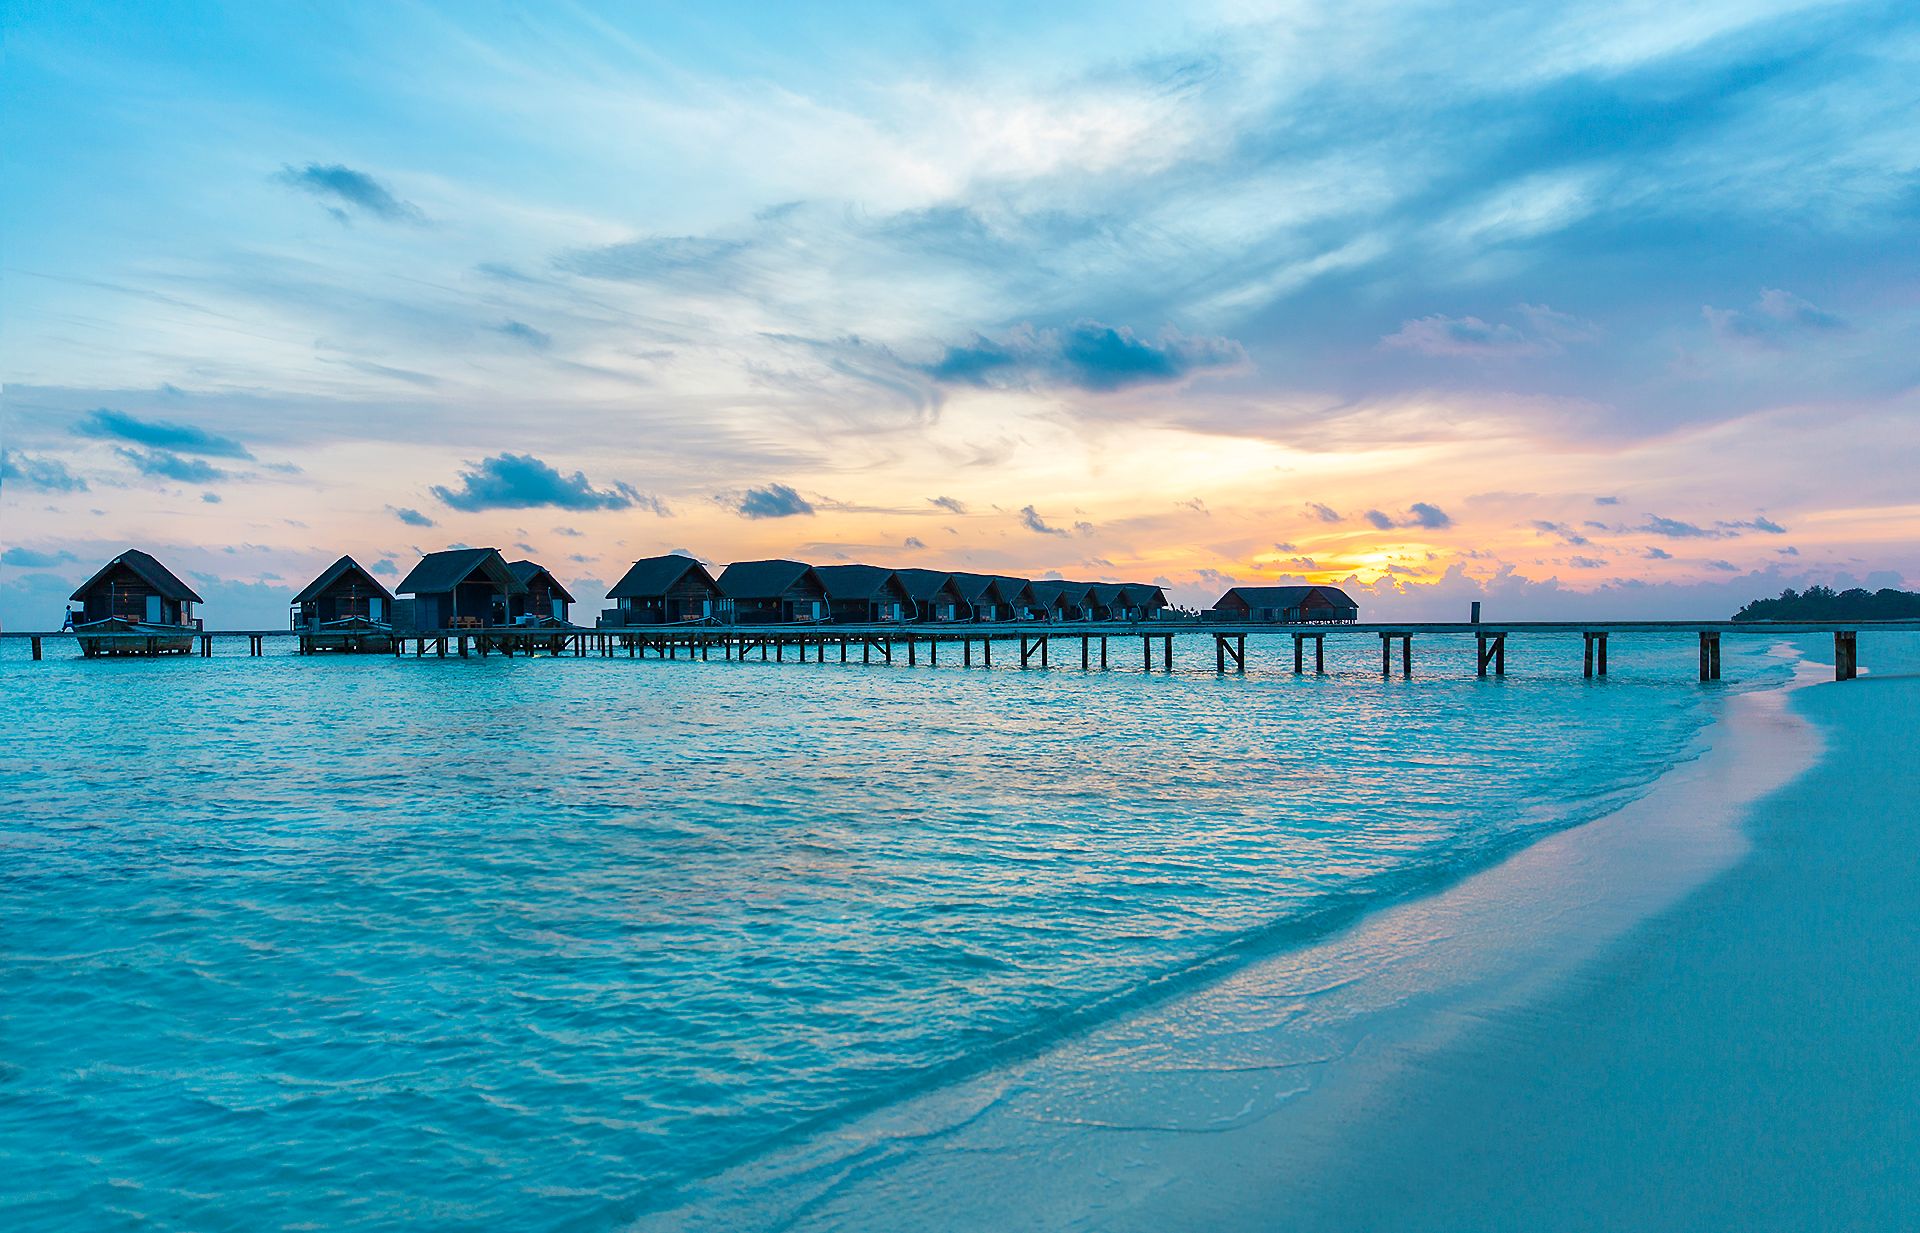 maldives, sea, man made, resort, bungalow, hut, ocean, sunset